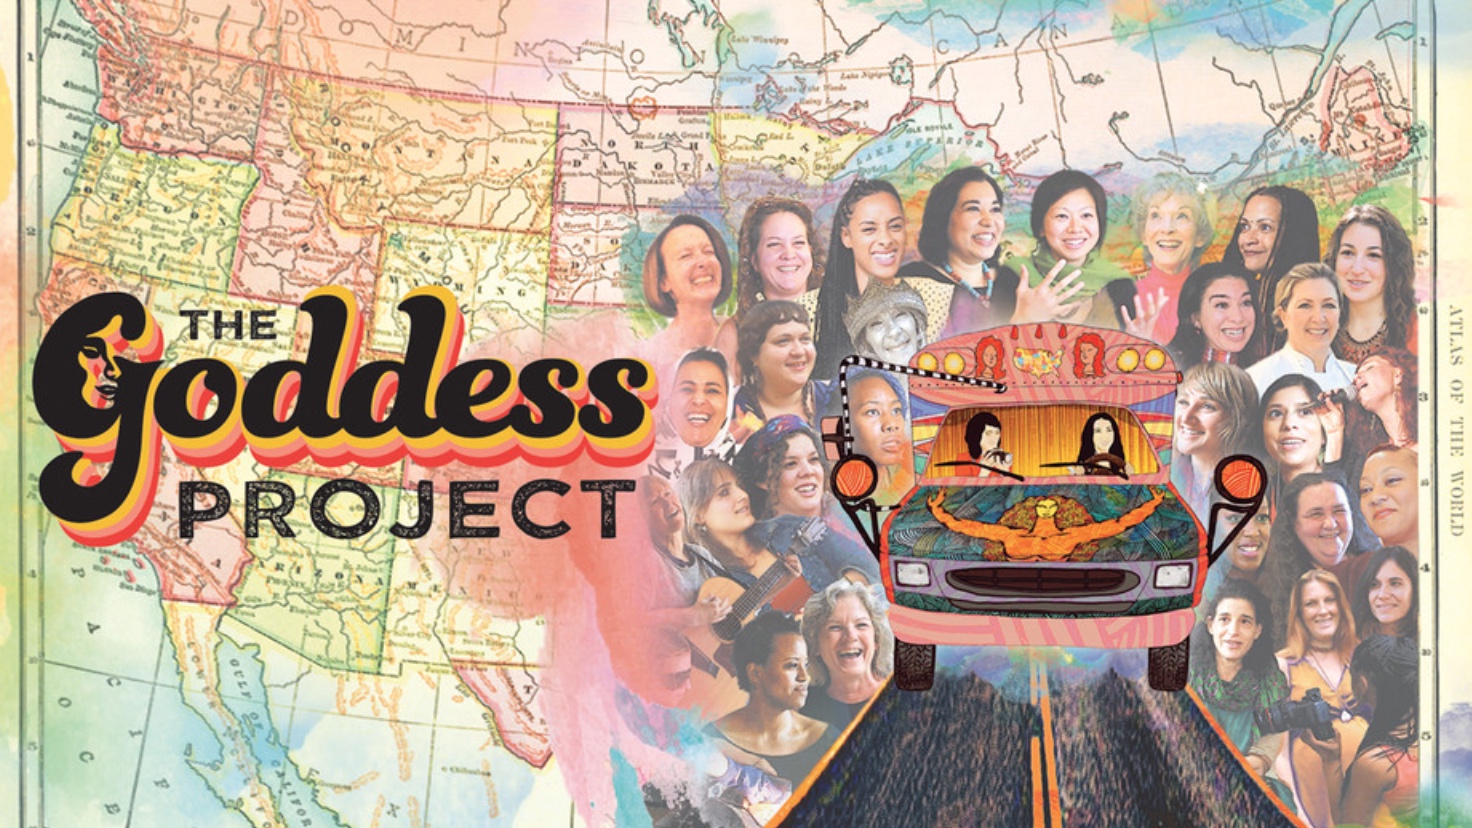 Ticket The Goddess Project 6 maart 2023